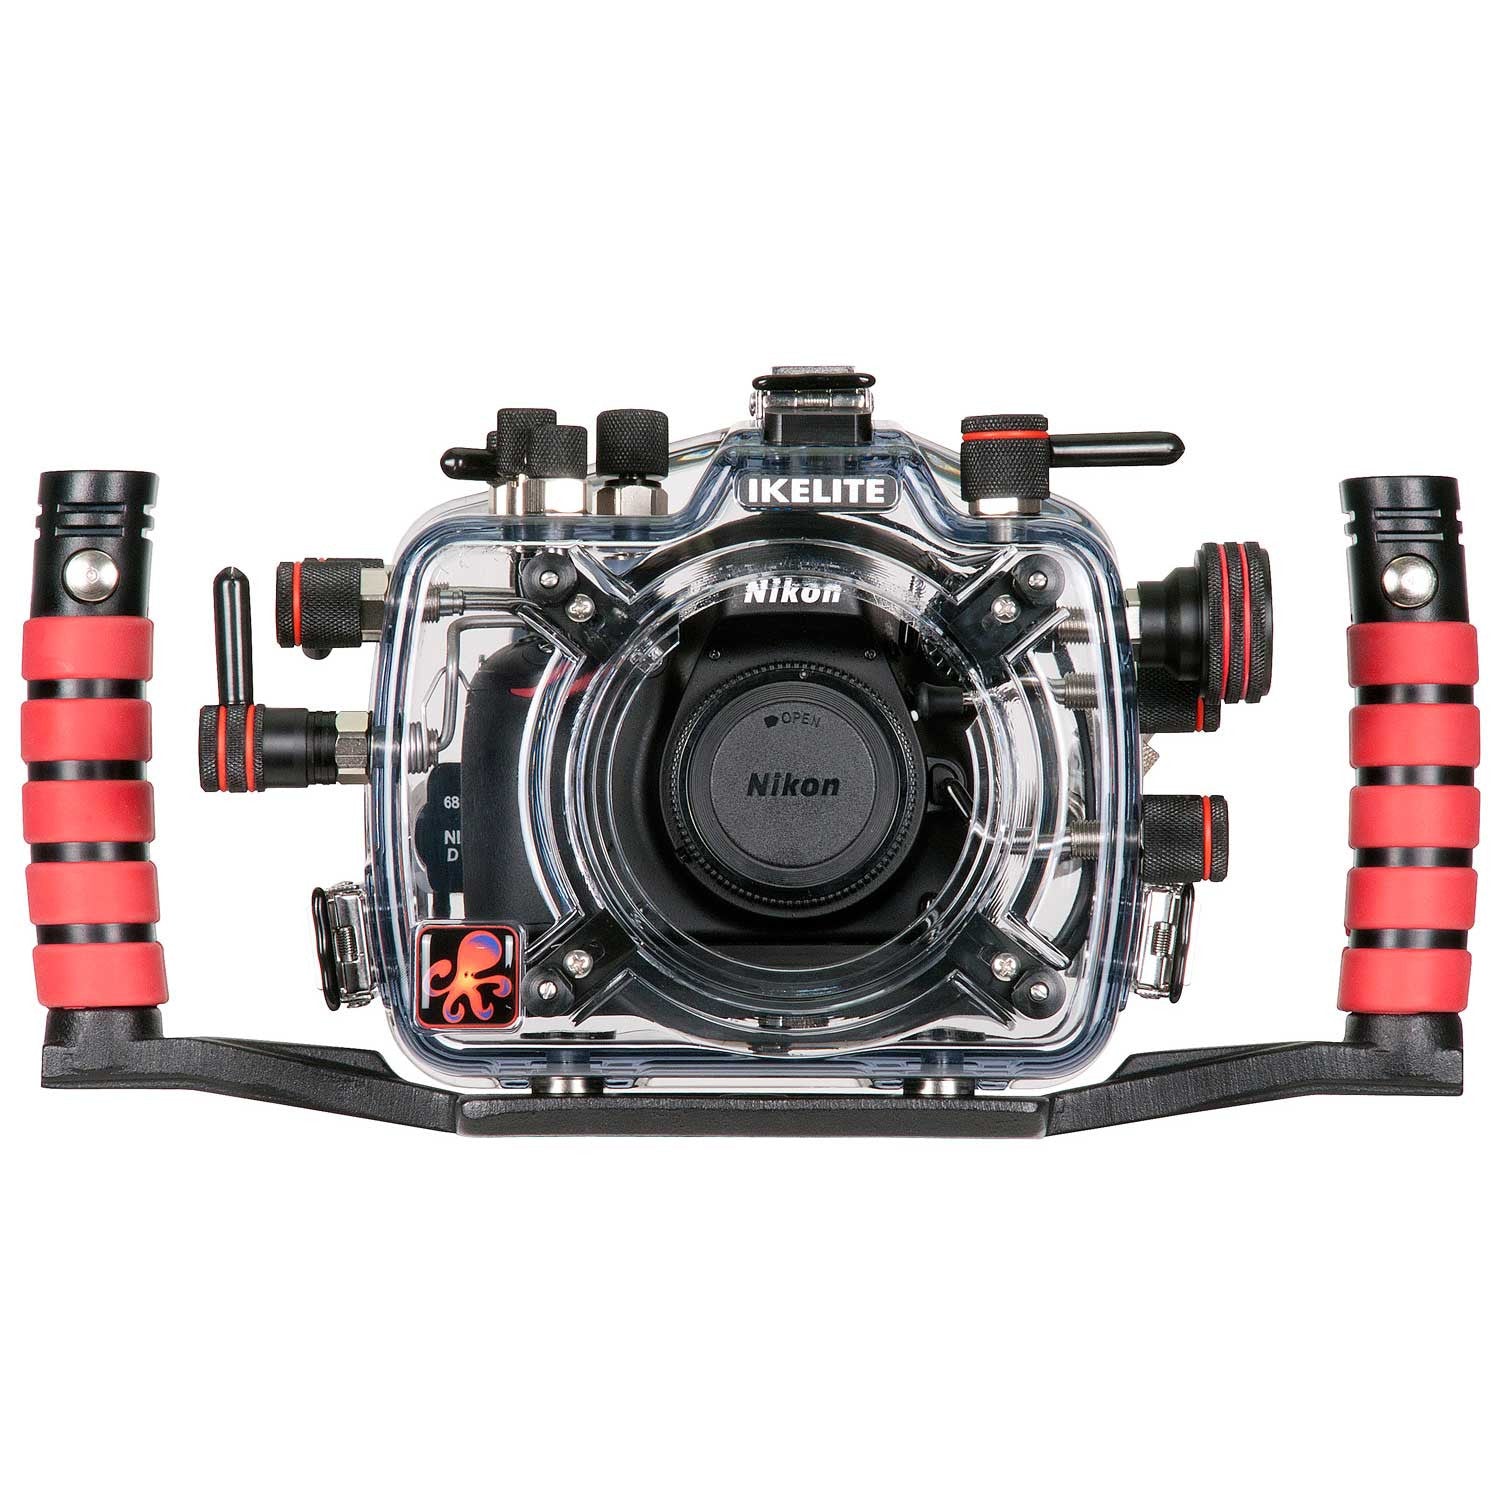 200FL Underwater TTL Housing for Nikon D5100 DSLR Cameras